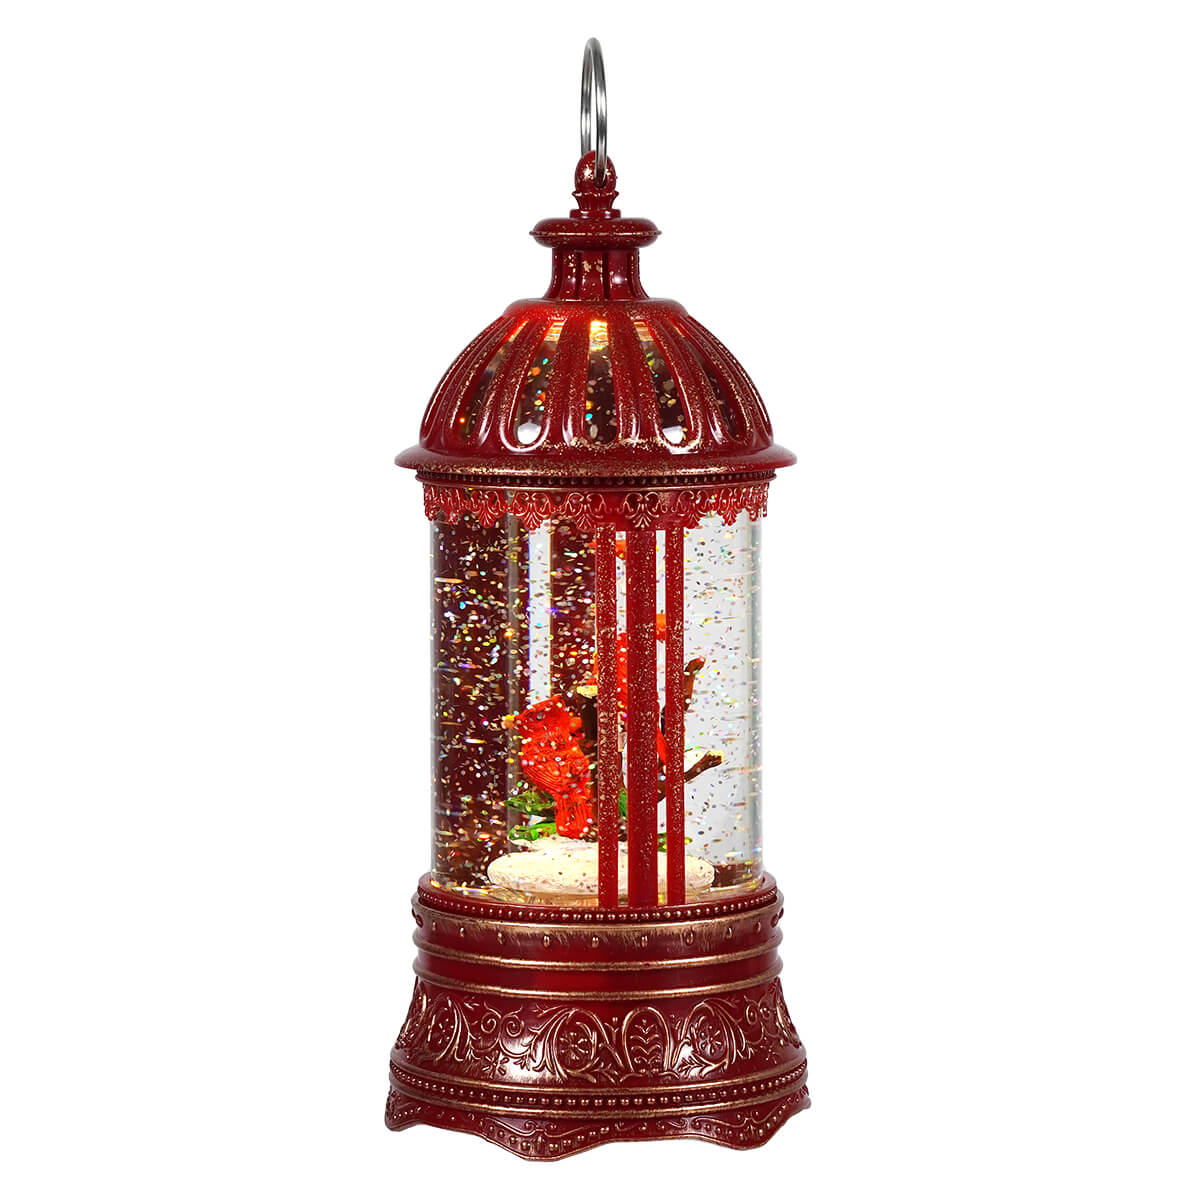 Lighted Musical Spinning Nesting Cardinals Water Globe Lantern